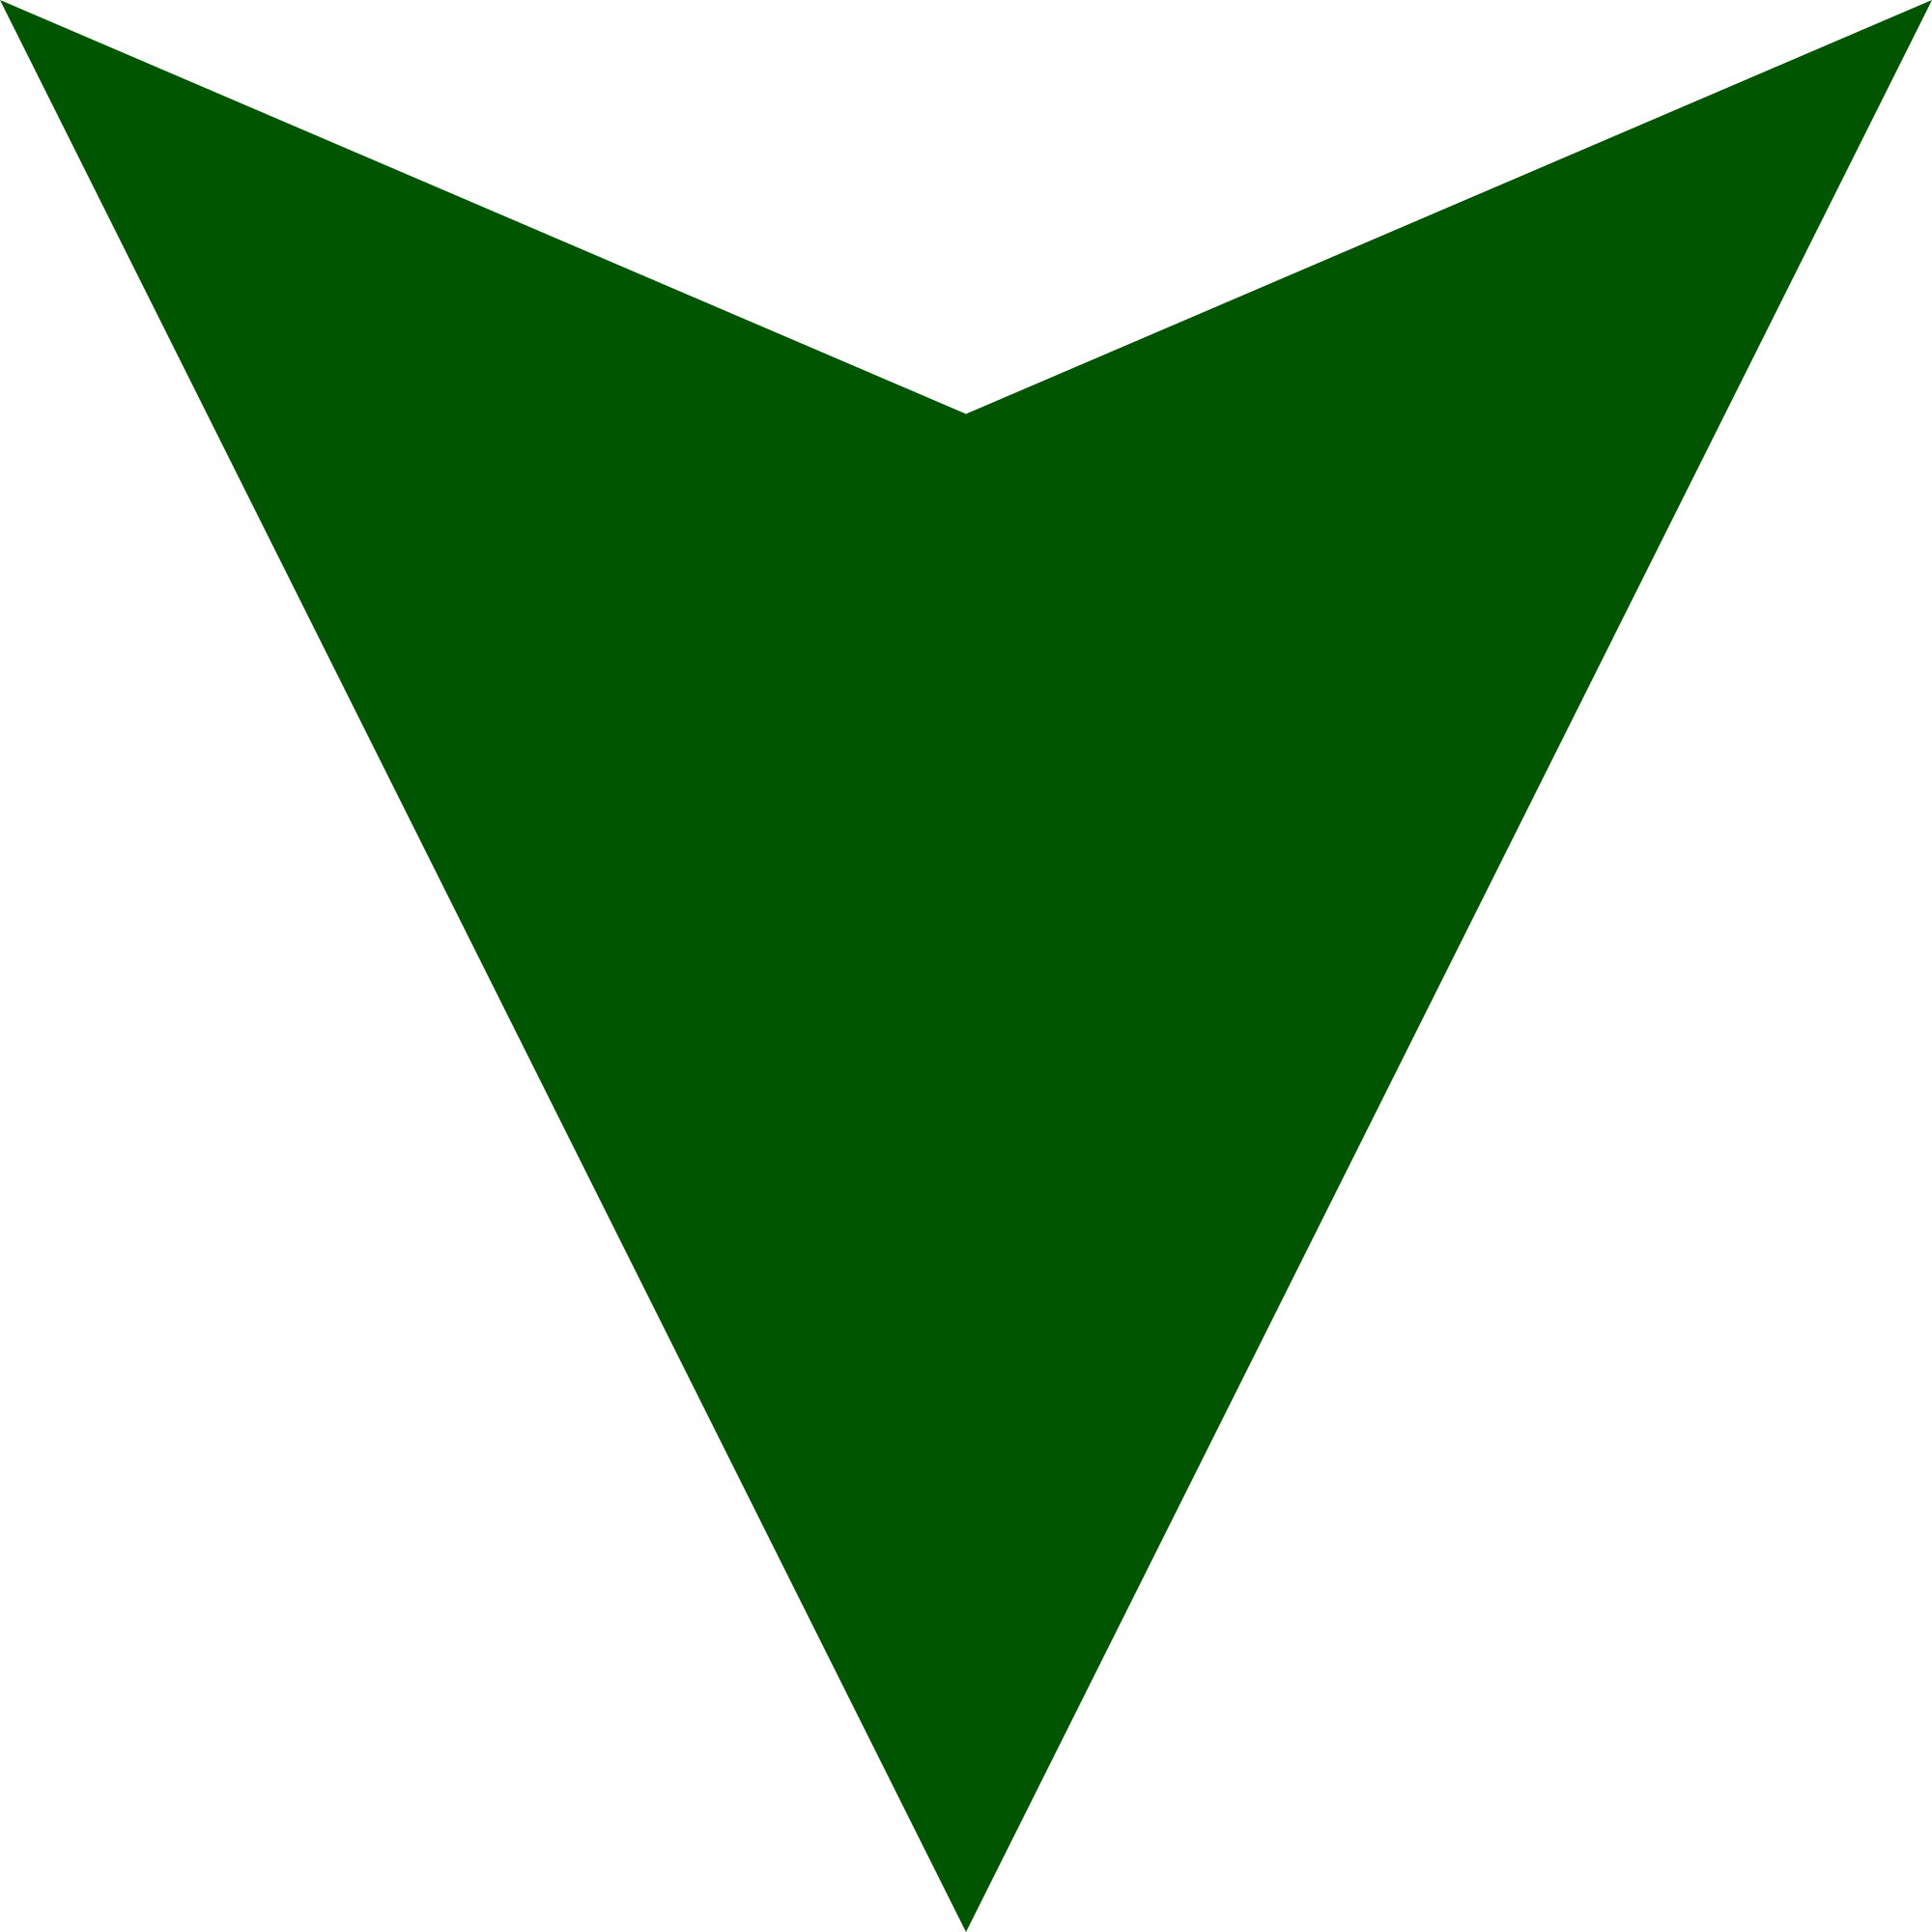 Open - Green Arrow Down Icon (2000x2000)